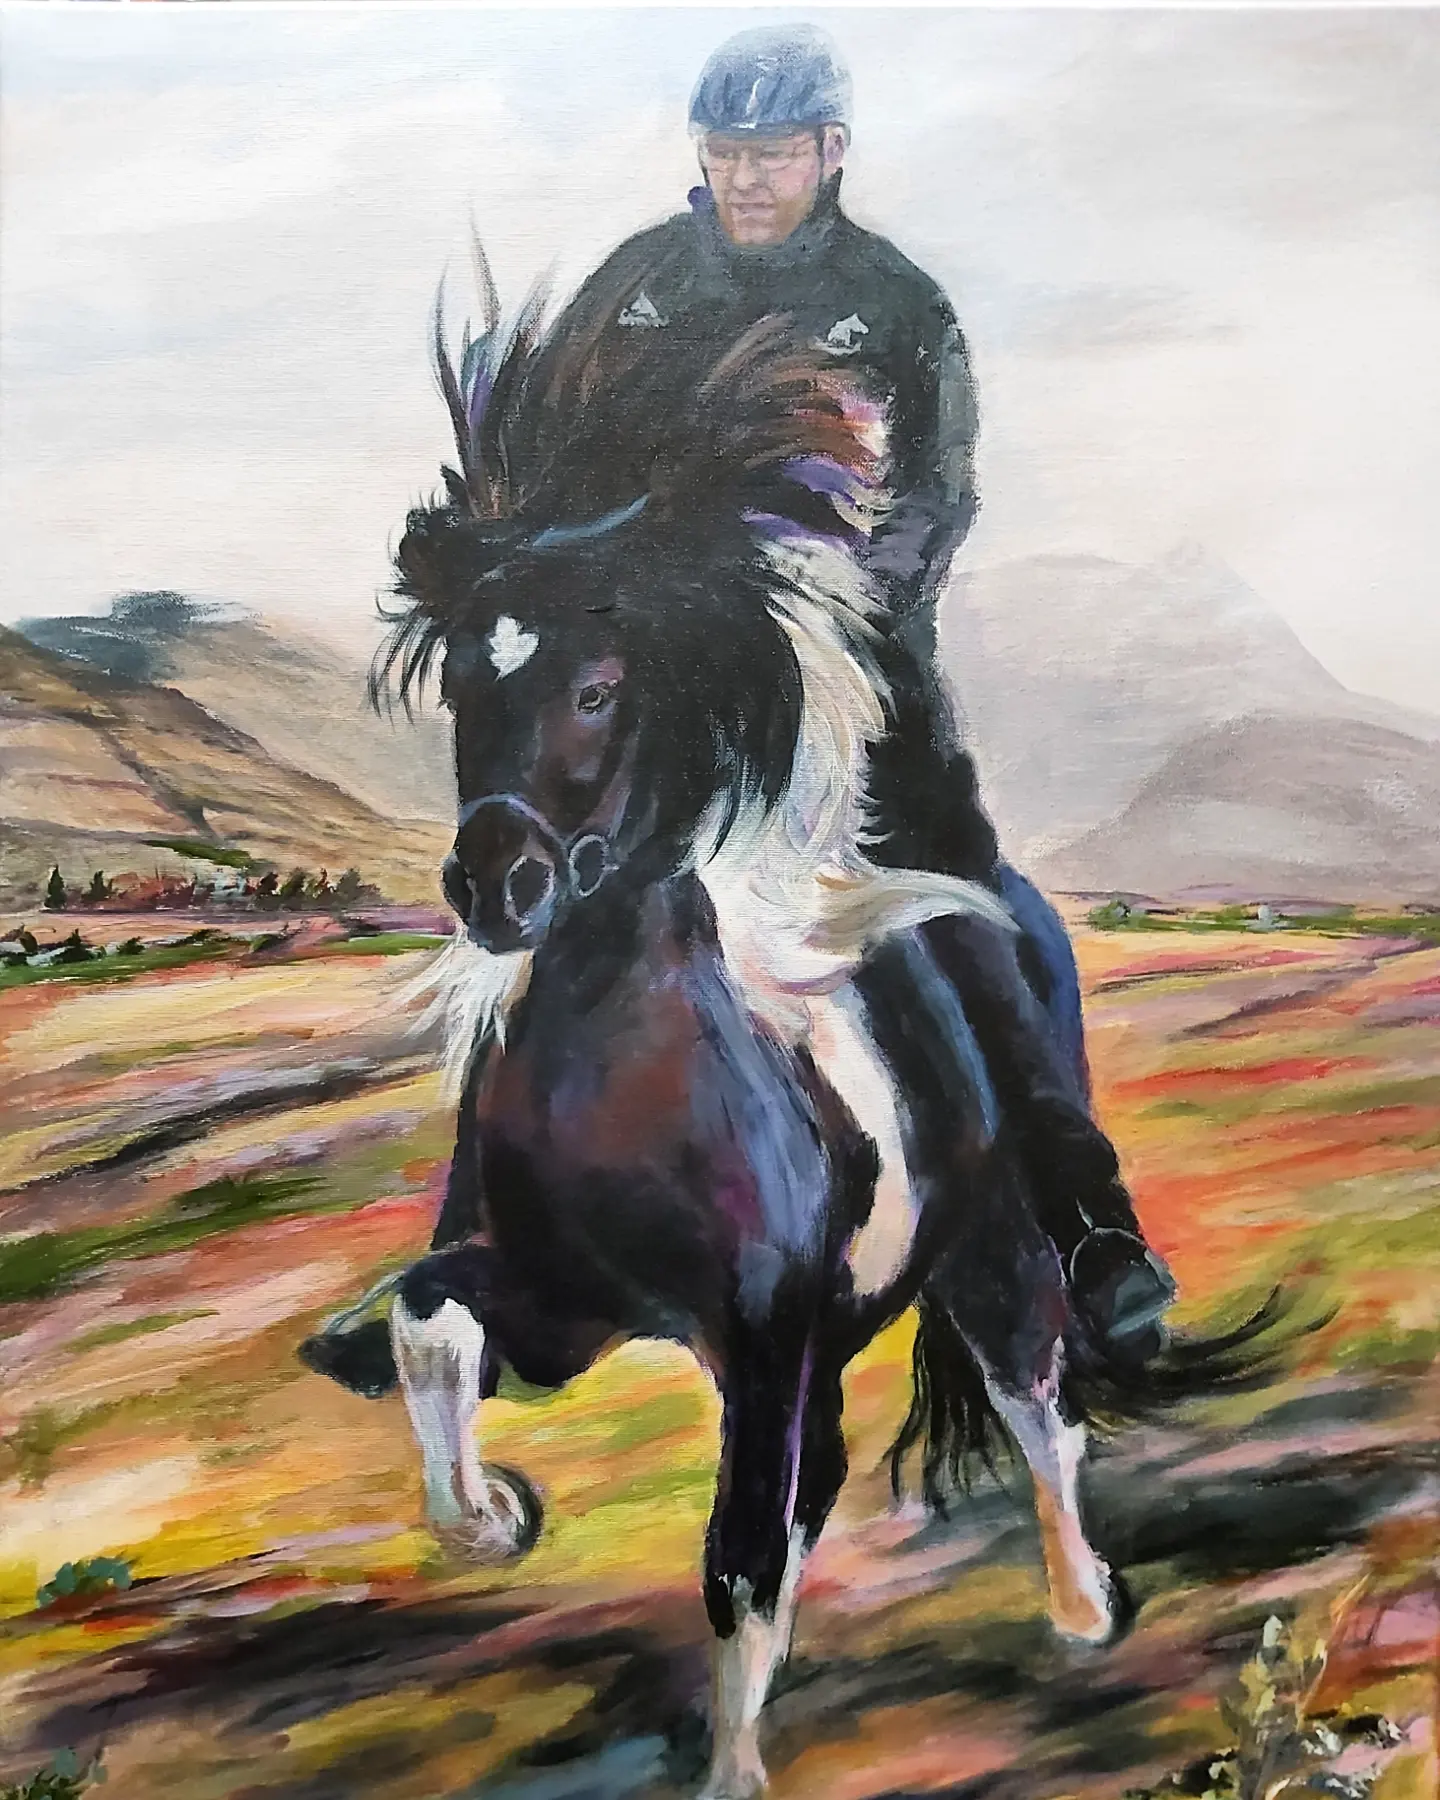 Leynir frá Fremra-Hálsi, a painting of an Icelandic horse by Bertha Kvaran